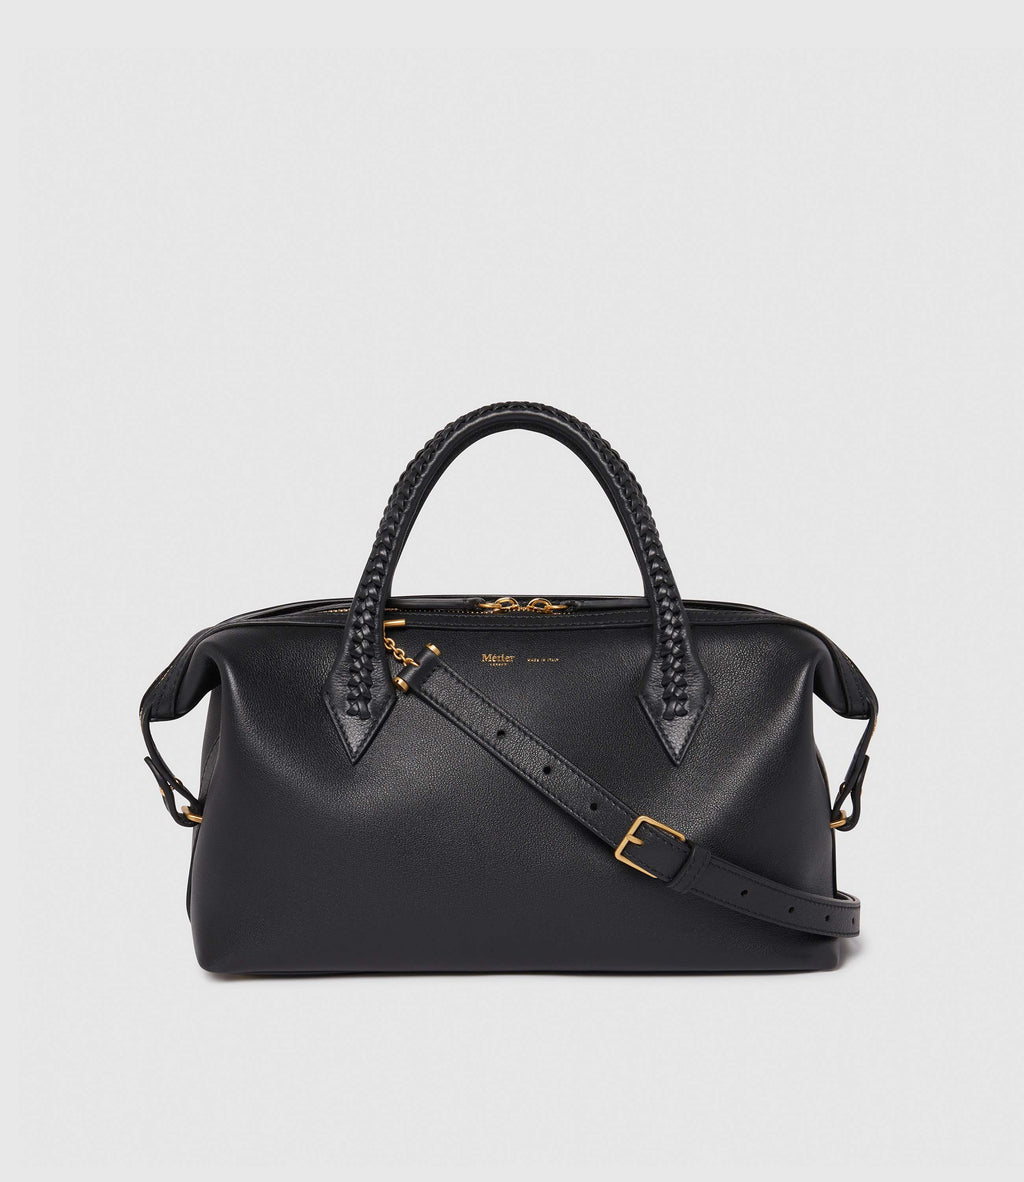 Métier Women's Small Handbag Black Leather